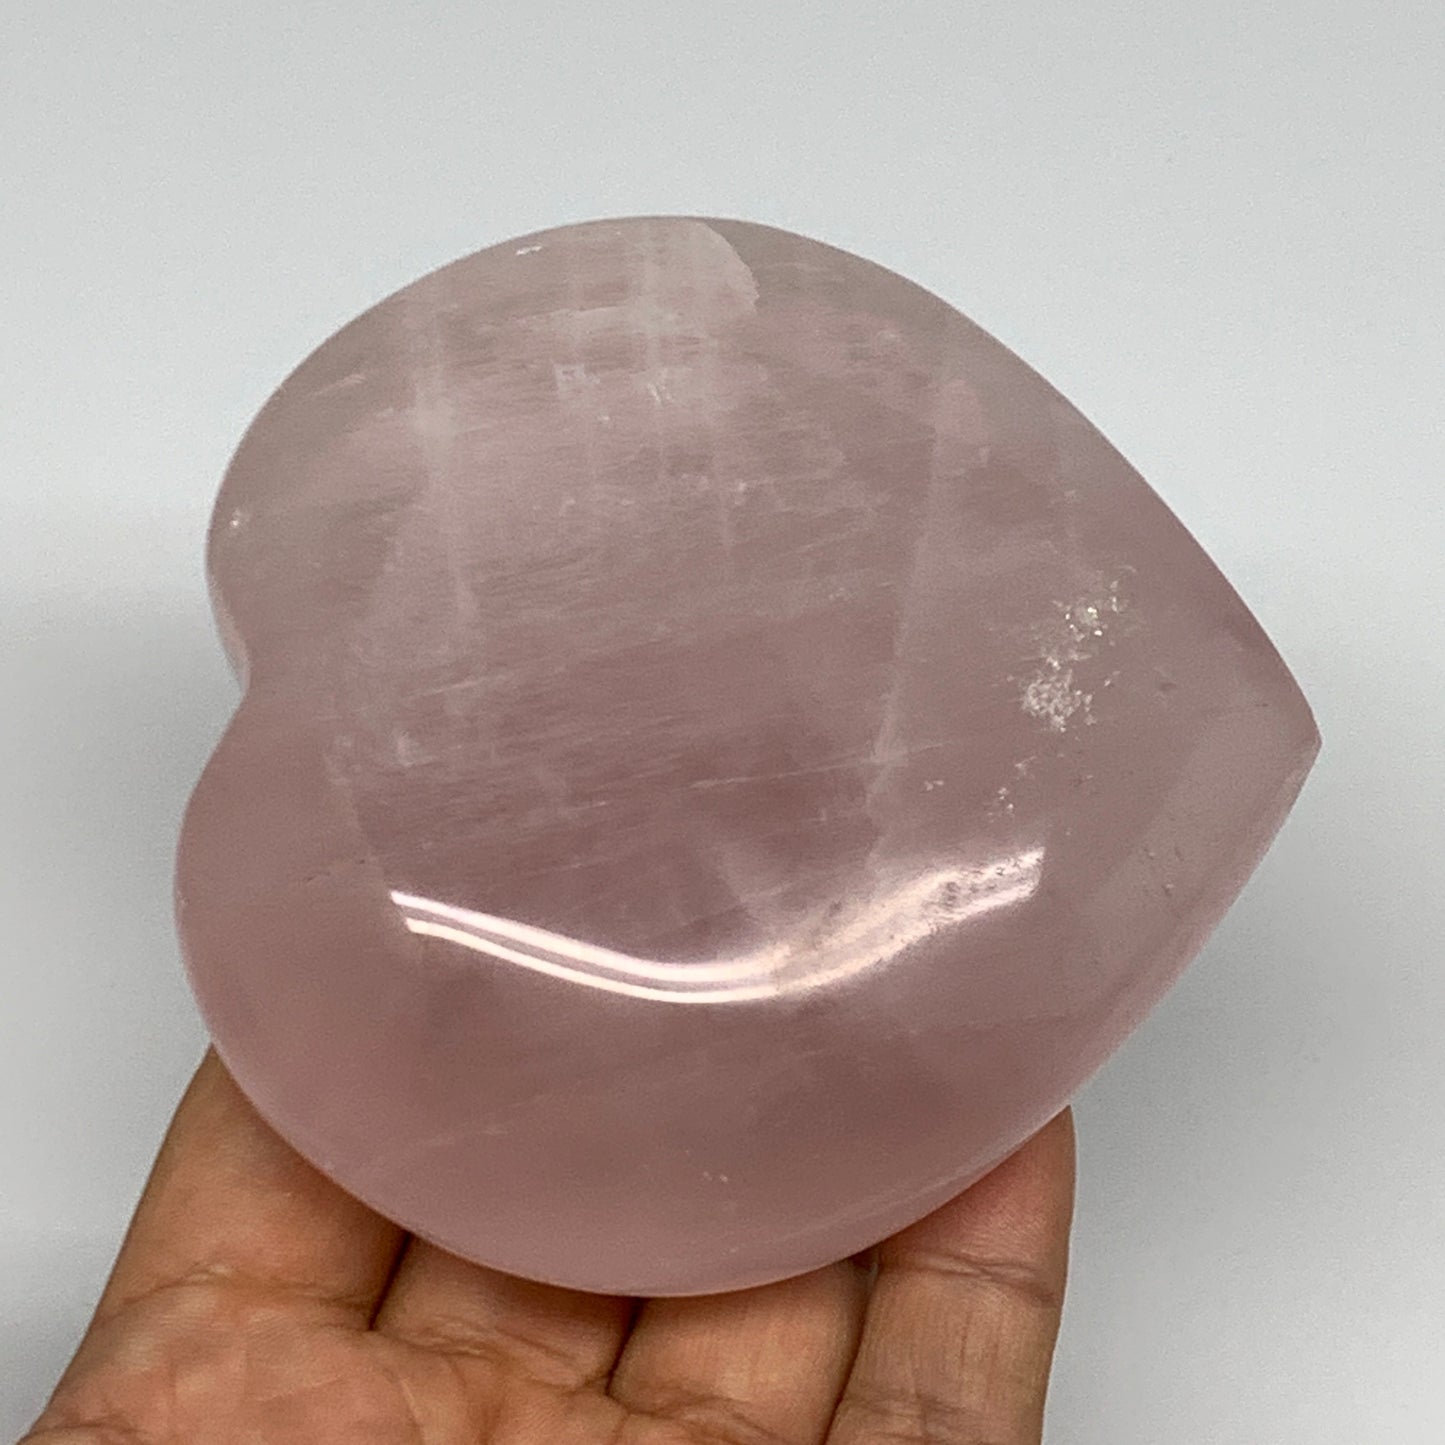 387.9g, 3.6" x 3.6" x 1.4" Rose Quartz Heart Healing Crystal @Madagascar, B17393